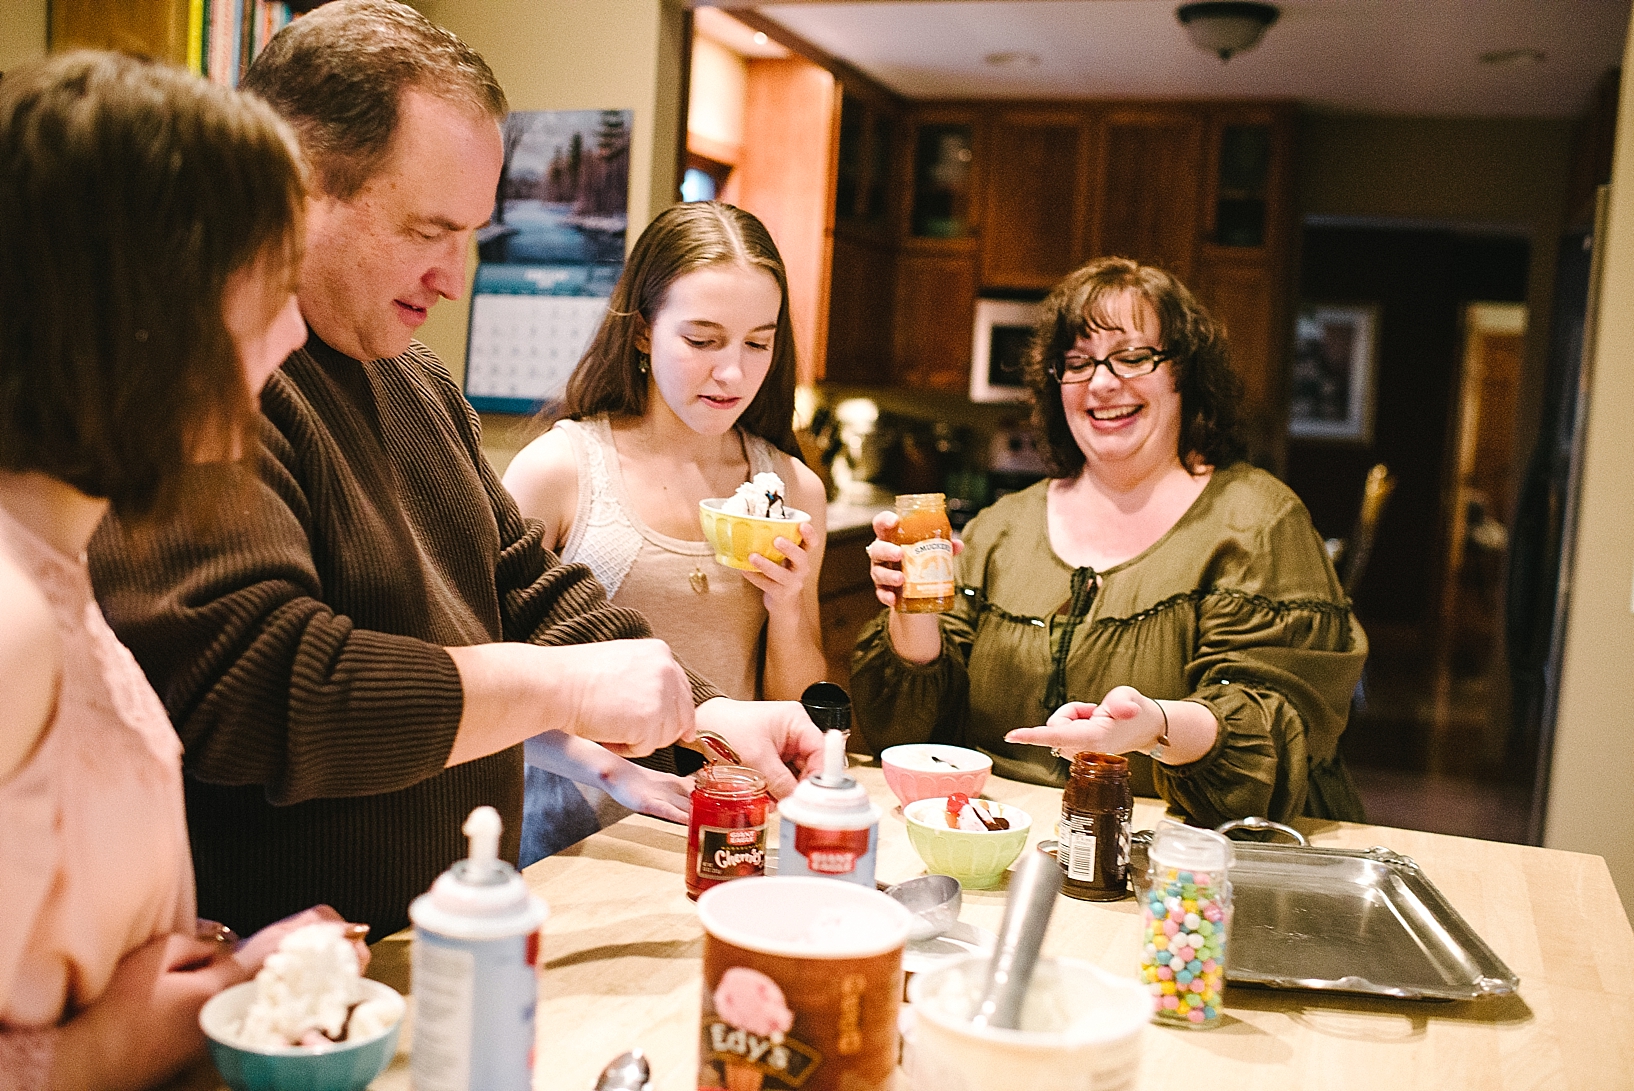 family making ice cream sundaes in kitchen